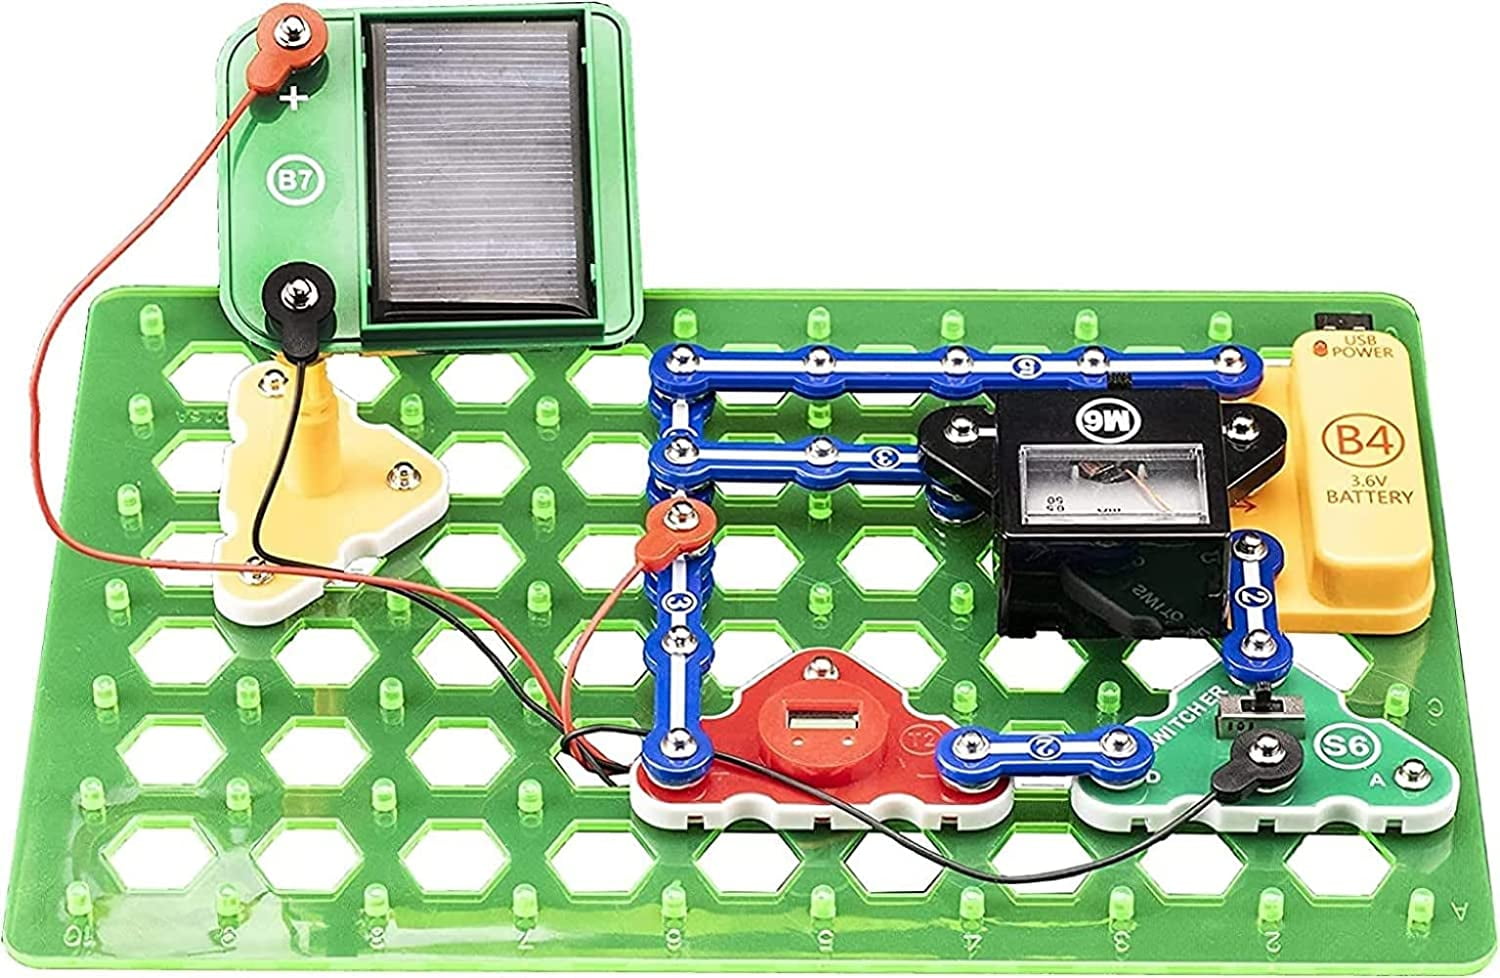 Jade Hare Educational Science Kits, Snap Circuits, Stem Toys